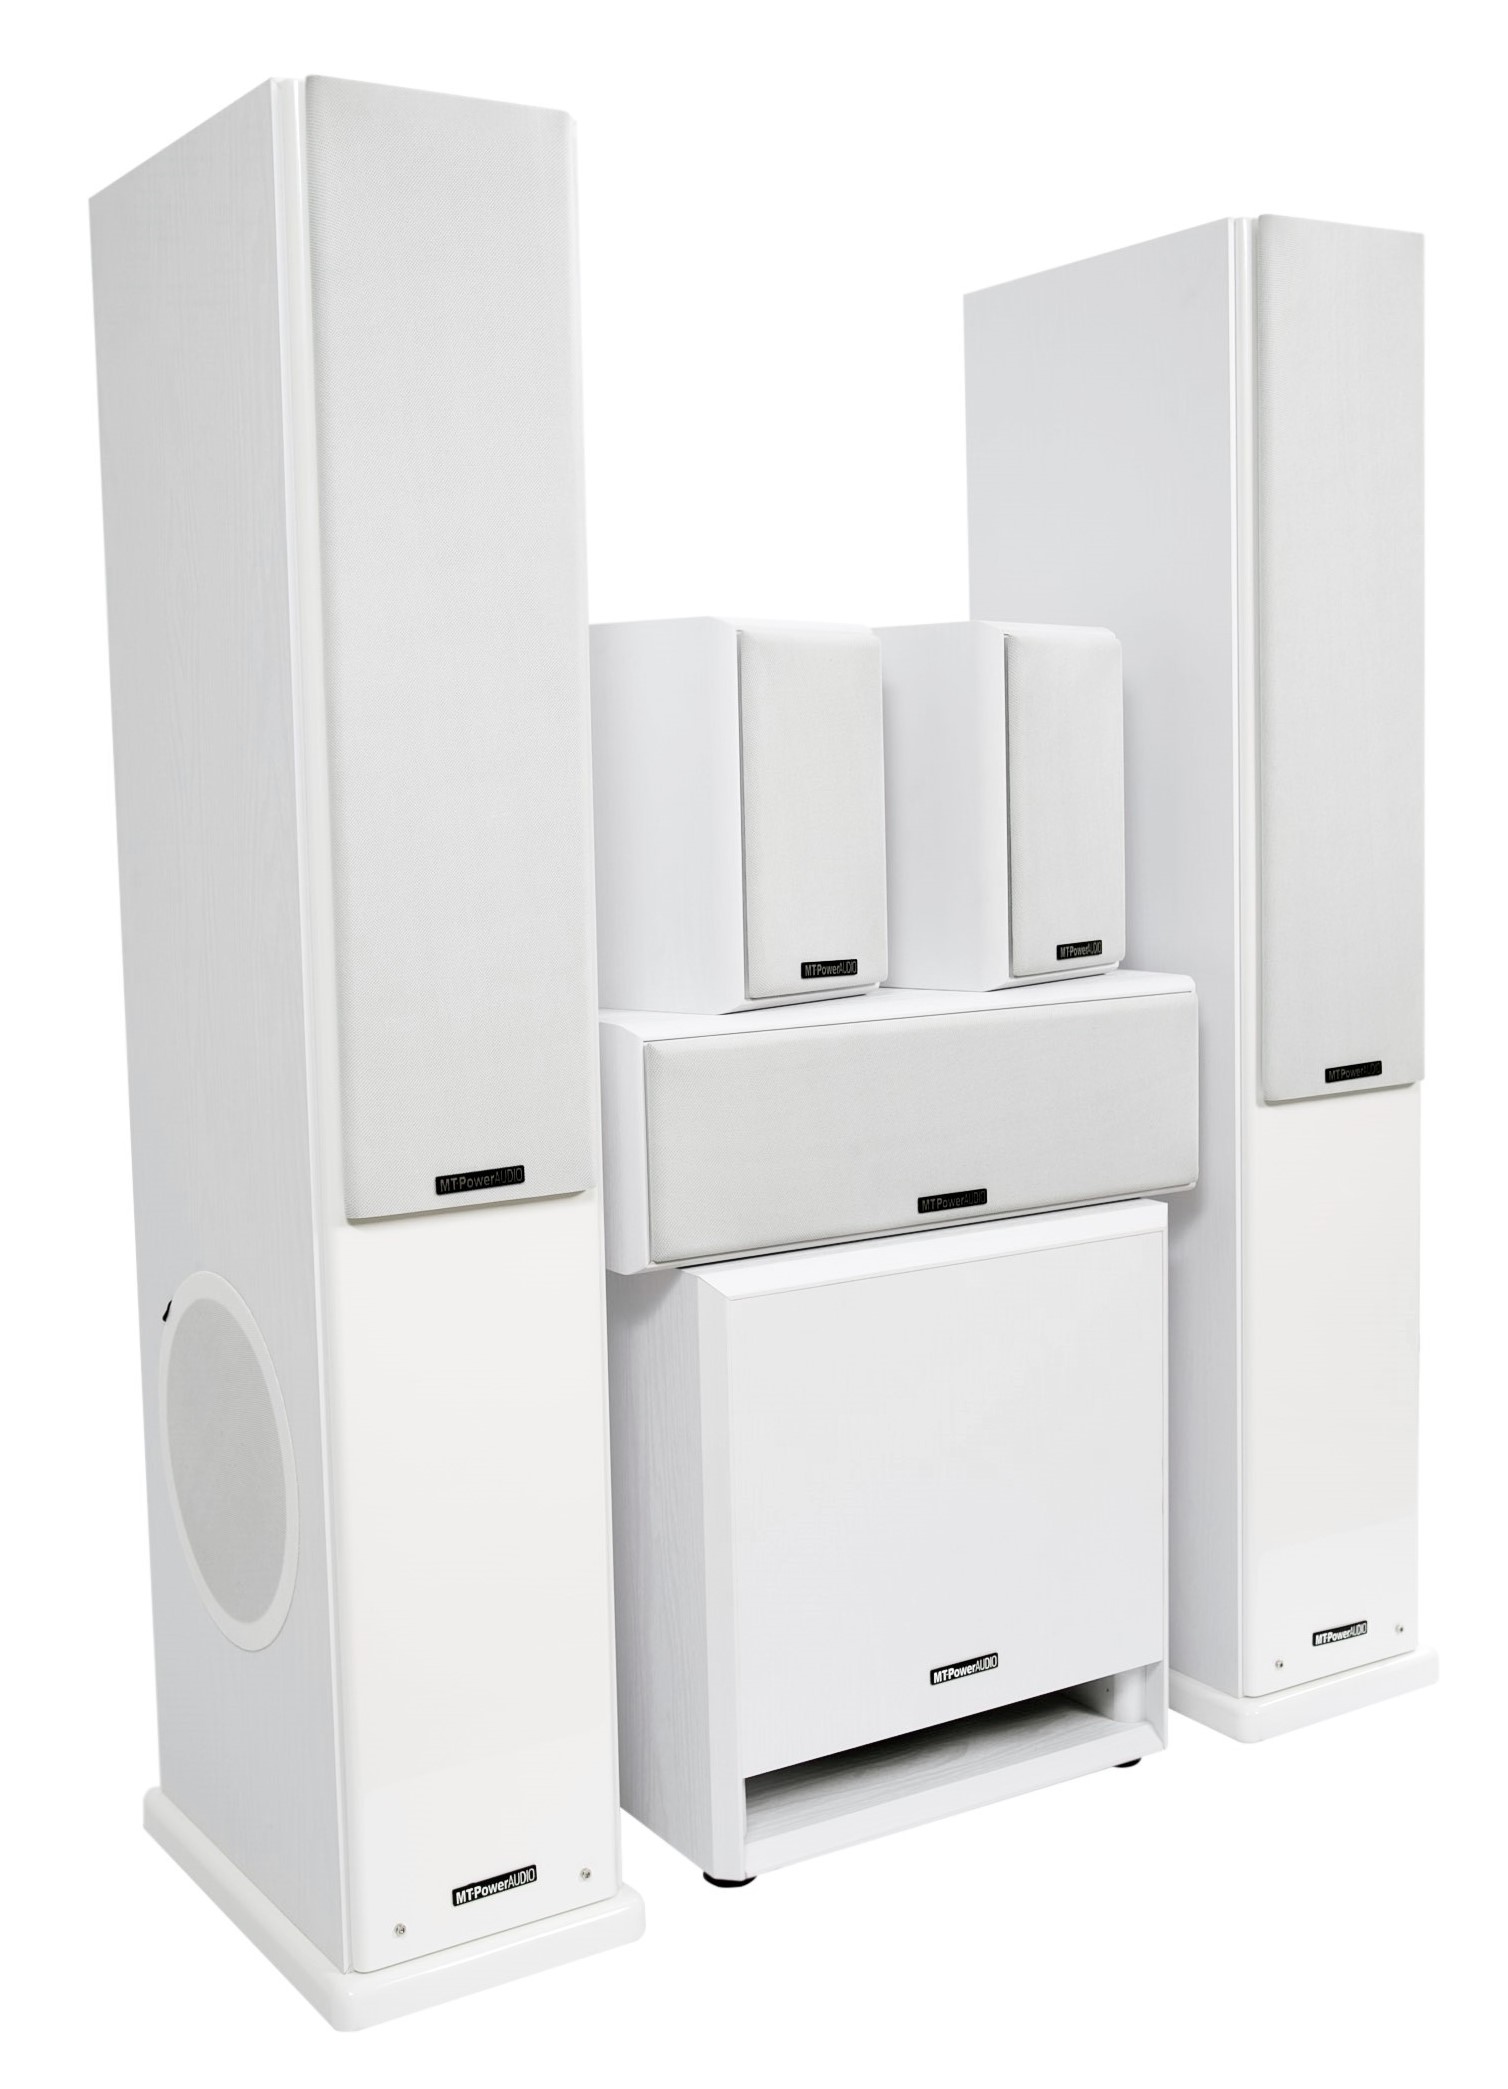 Комплекты акустики 5.1 MT-Power Elegance-2 white set 5.1 (white grills) комплекты акустики 3 0 mt power performance white set 3 0